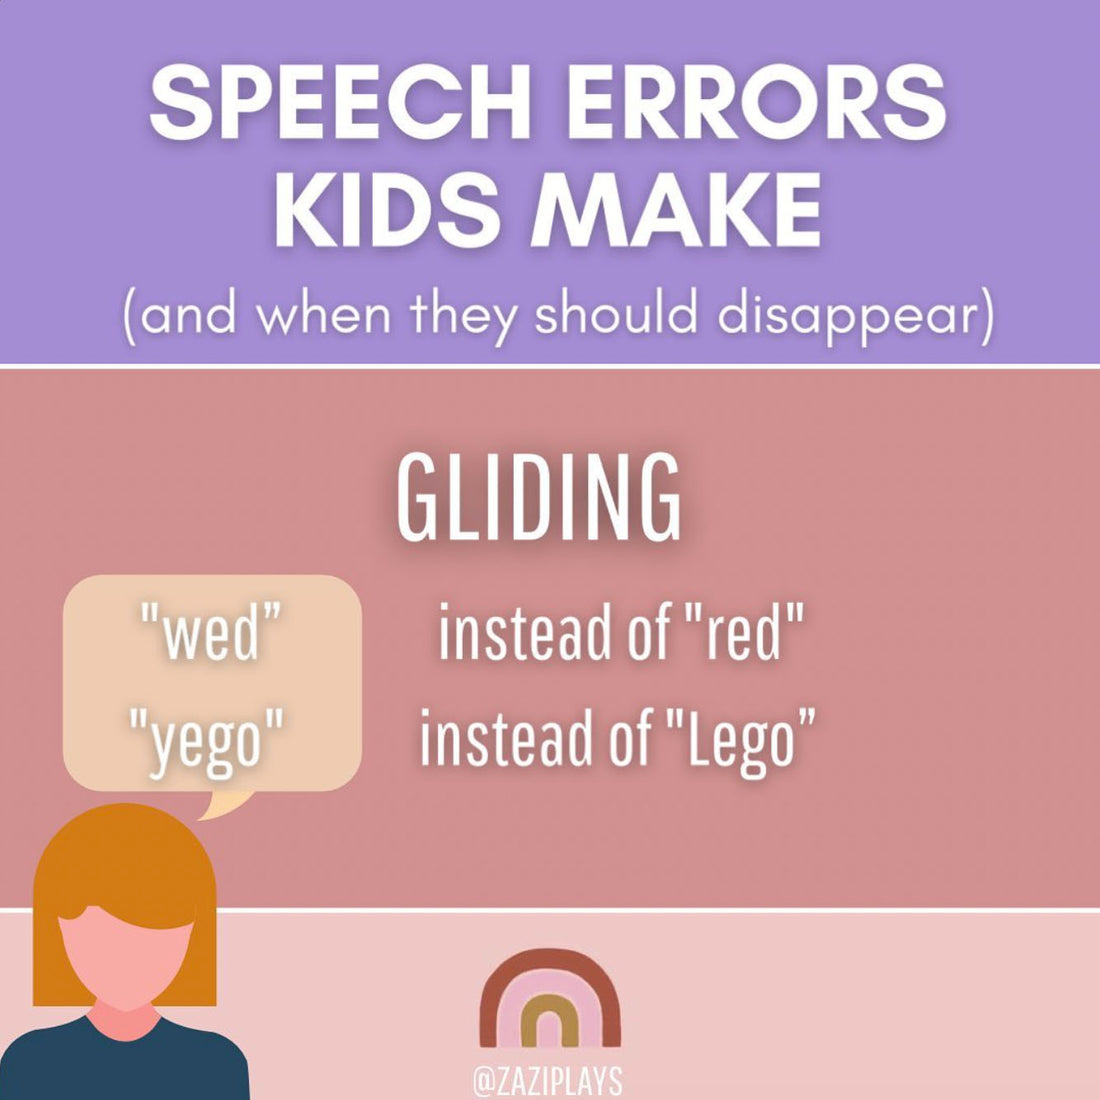 Speech errors kids make: Gliding